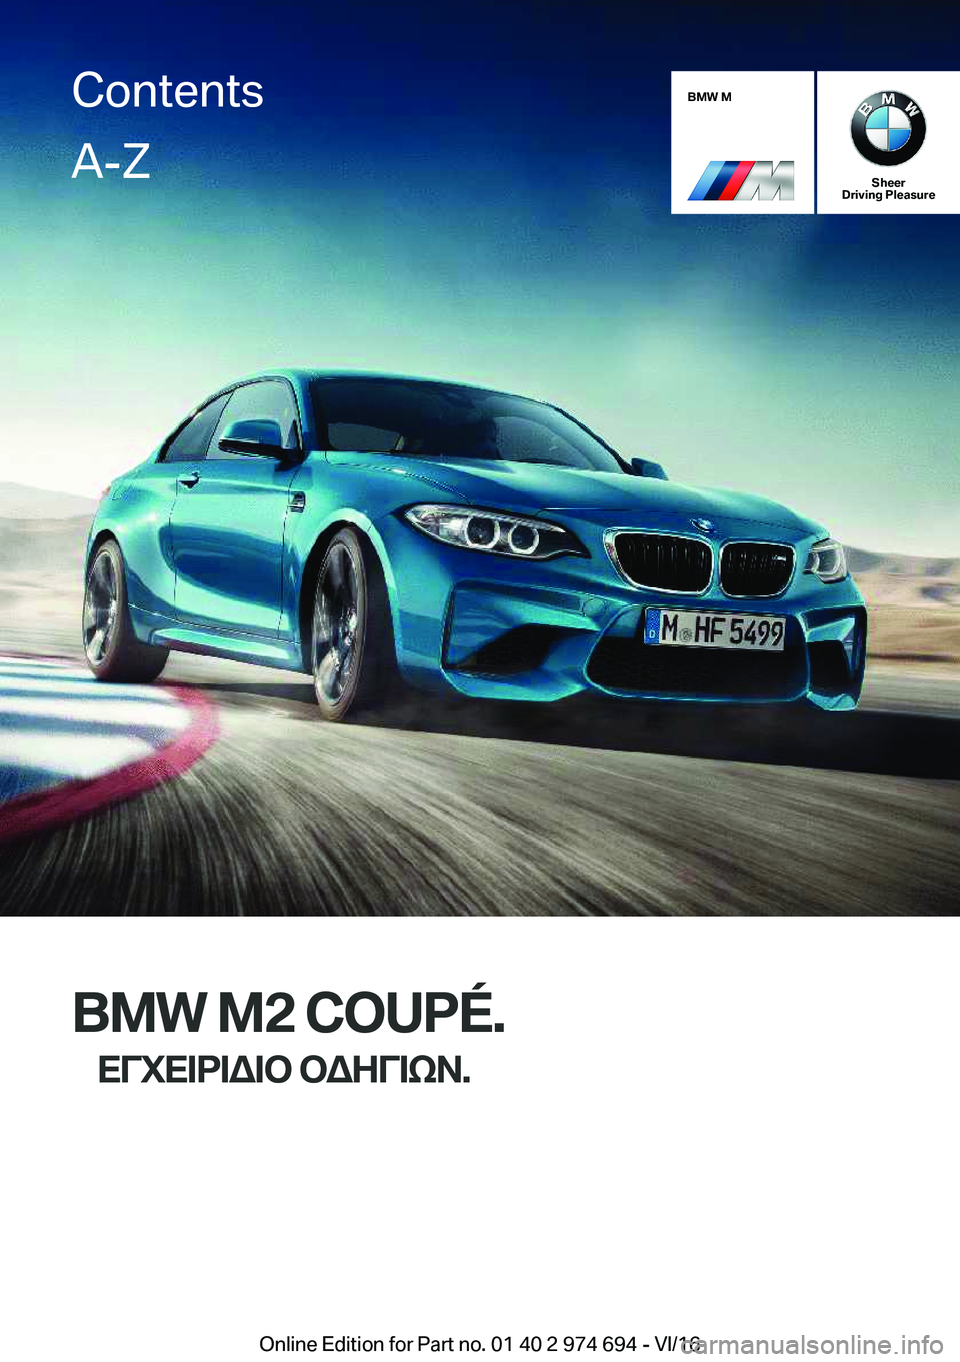 BMW M2 2017  ΟΔΗΓΌΣ ΧΡΉΣΗΣ (in Greek) �B�M�W��M
�S�h�e�e�r
�D�r�i�v�i�n�g��P�l�e�a�s�u�r�e
�B�M�W��M�2��C�O�U�P�